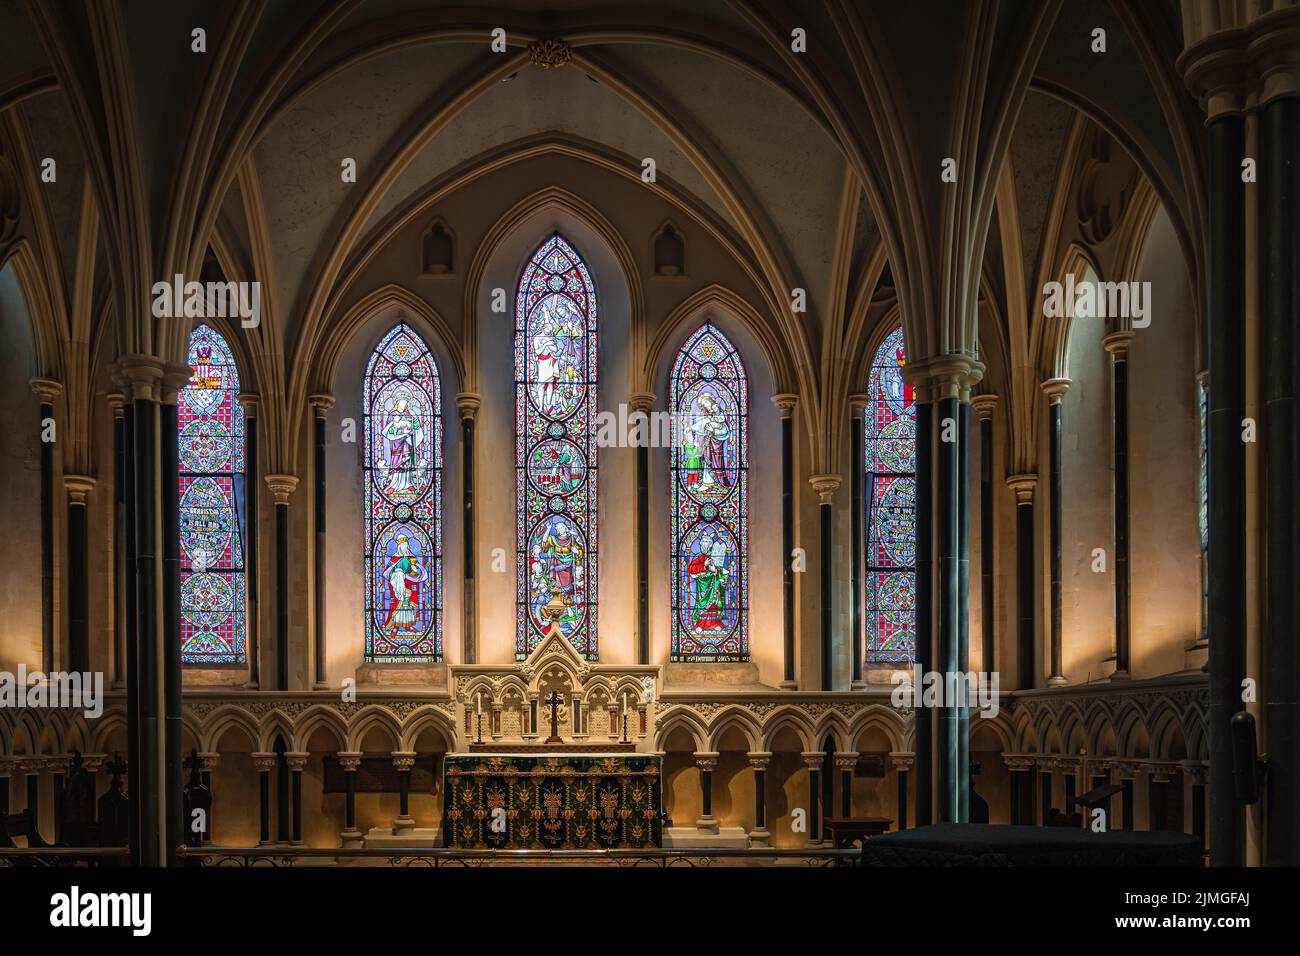 Beautifully illuminated side altar in St. Patricks Cathedral, Ireland Stock Photo